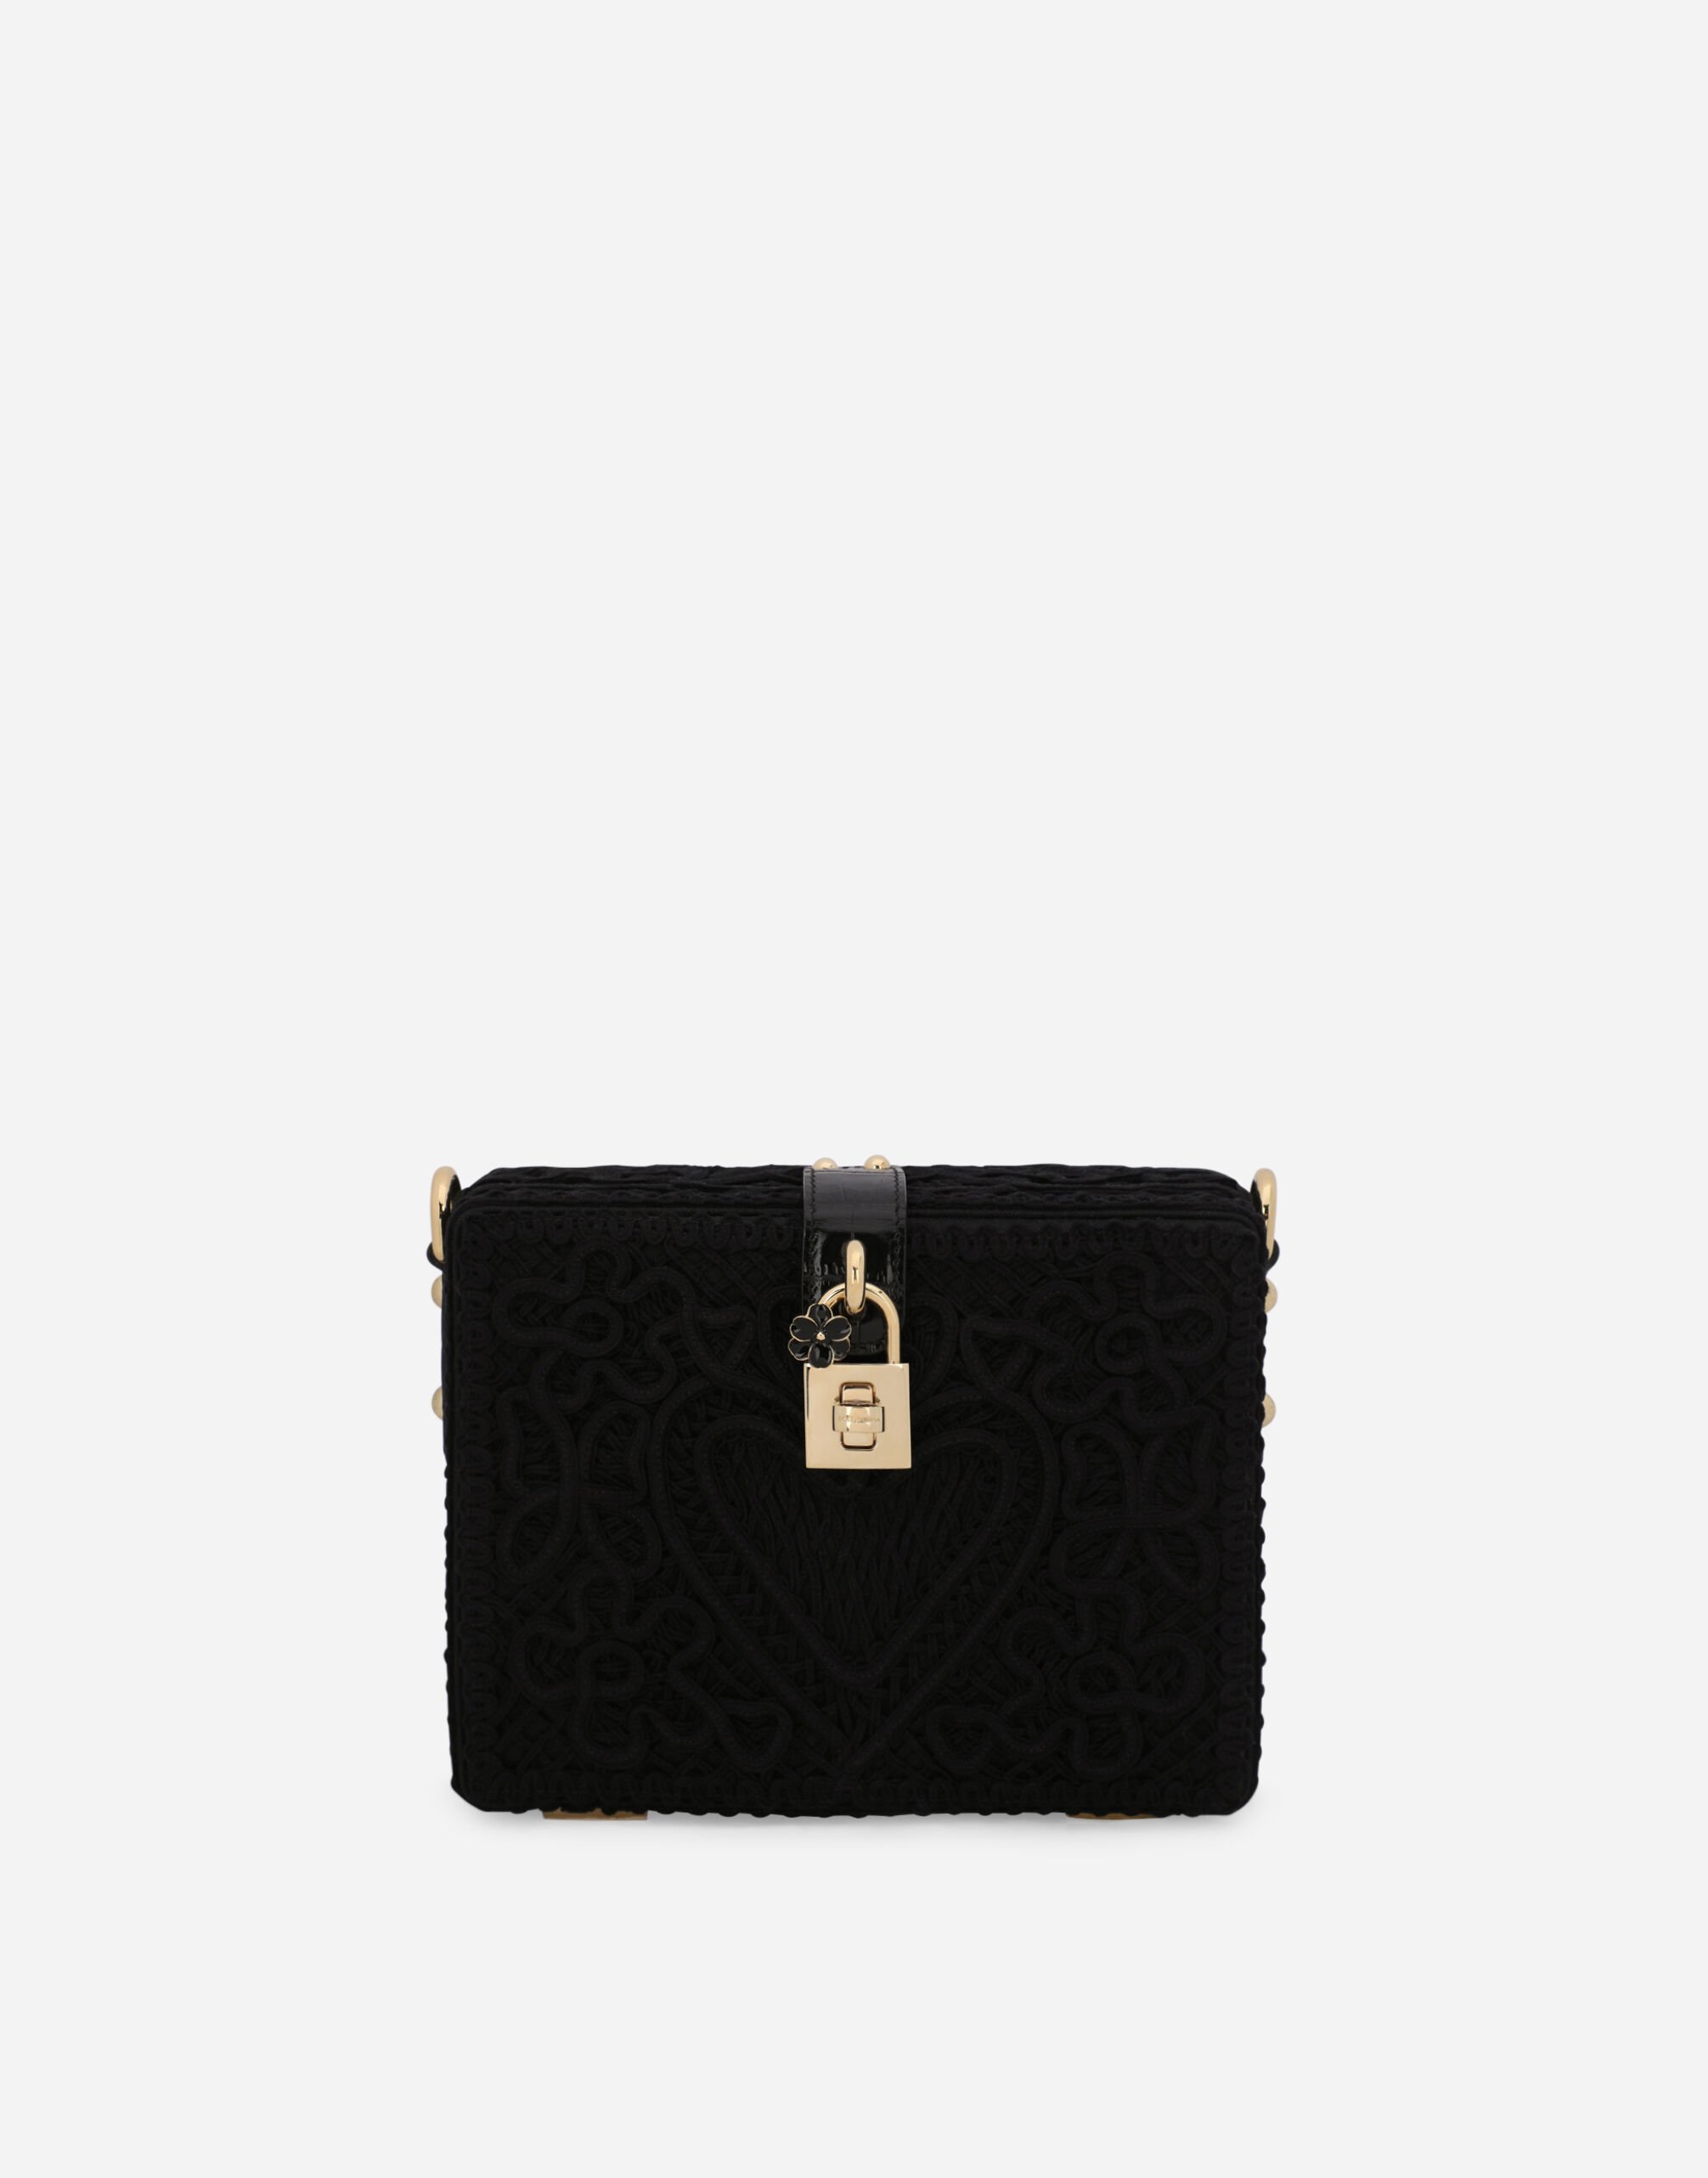 Dolce & Gabbana Dolce Box bag with cordonetto detailing Black BB7625AU640